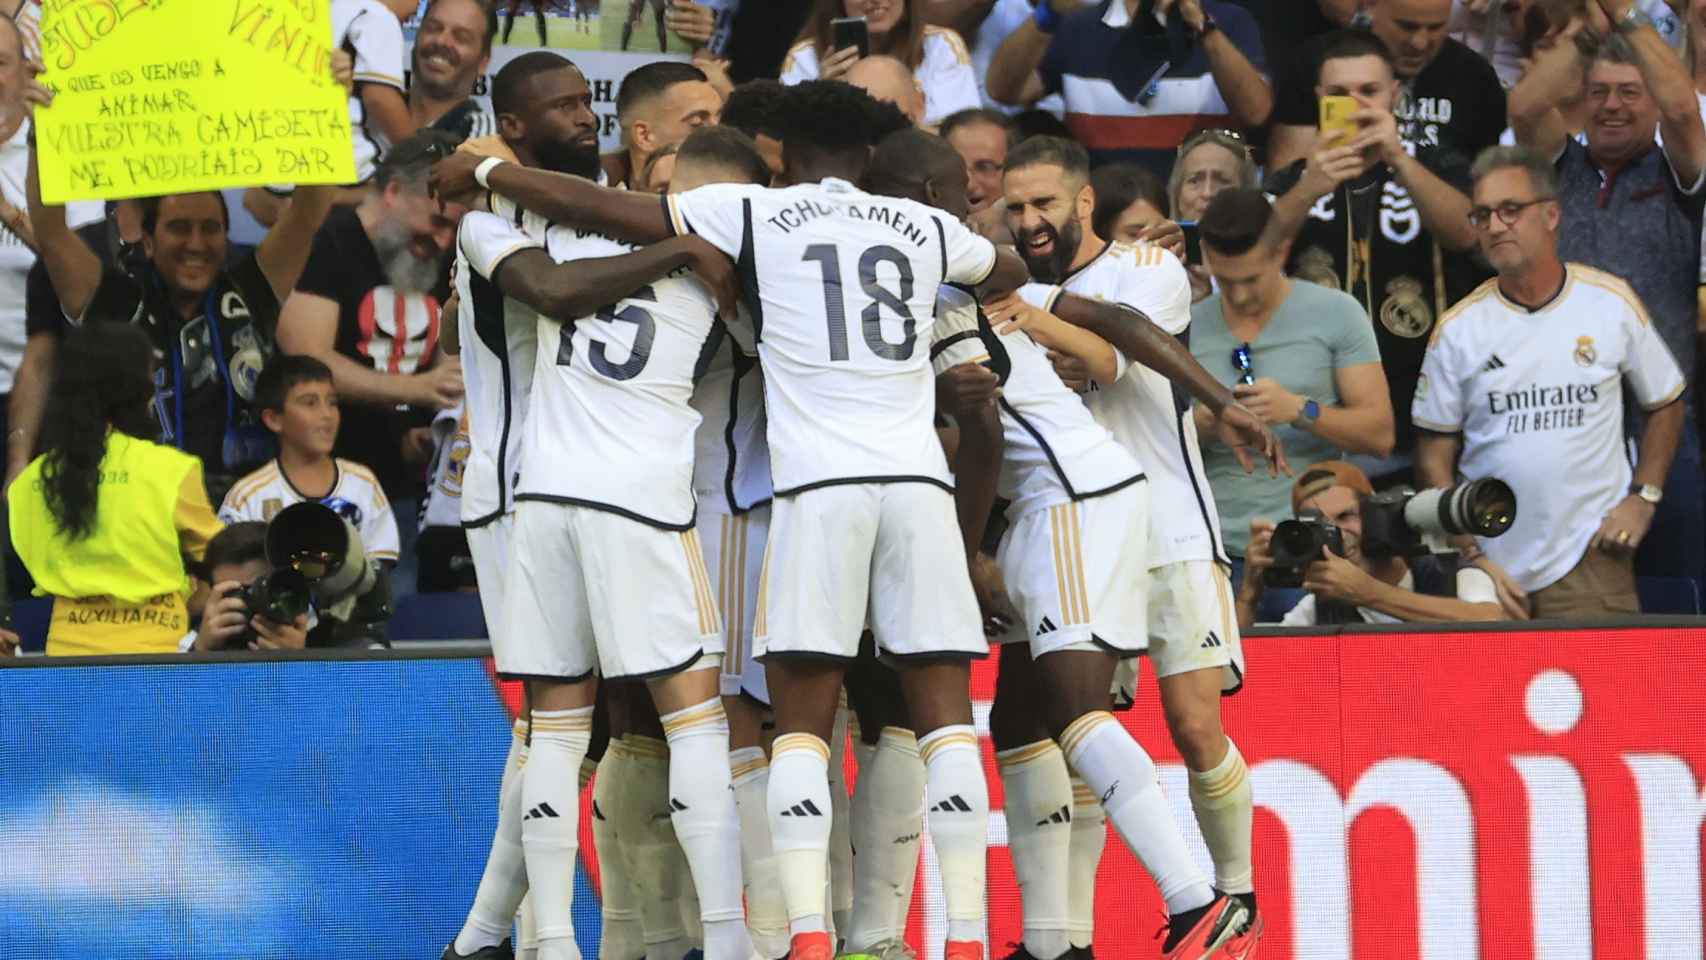 Corinthians vs America MG: An Exciting Football Clash